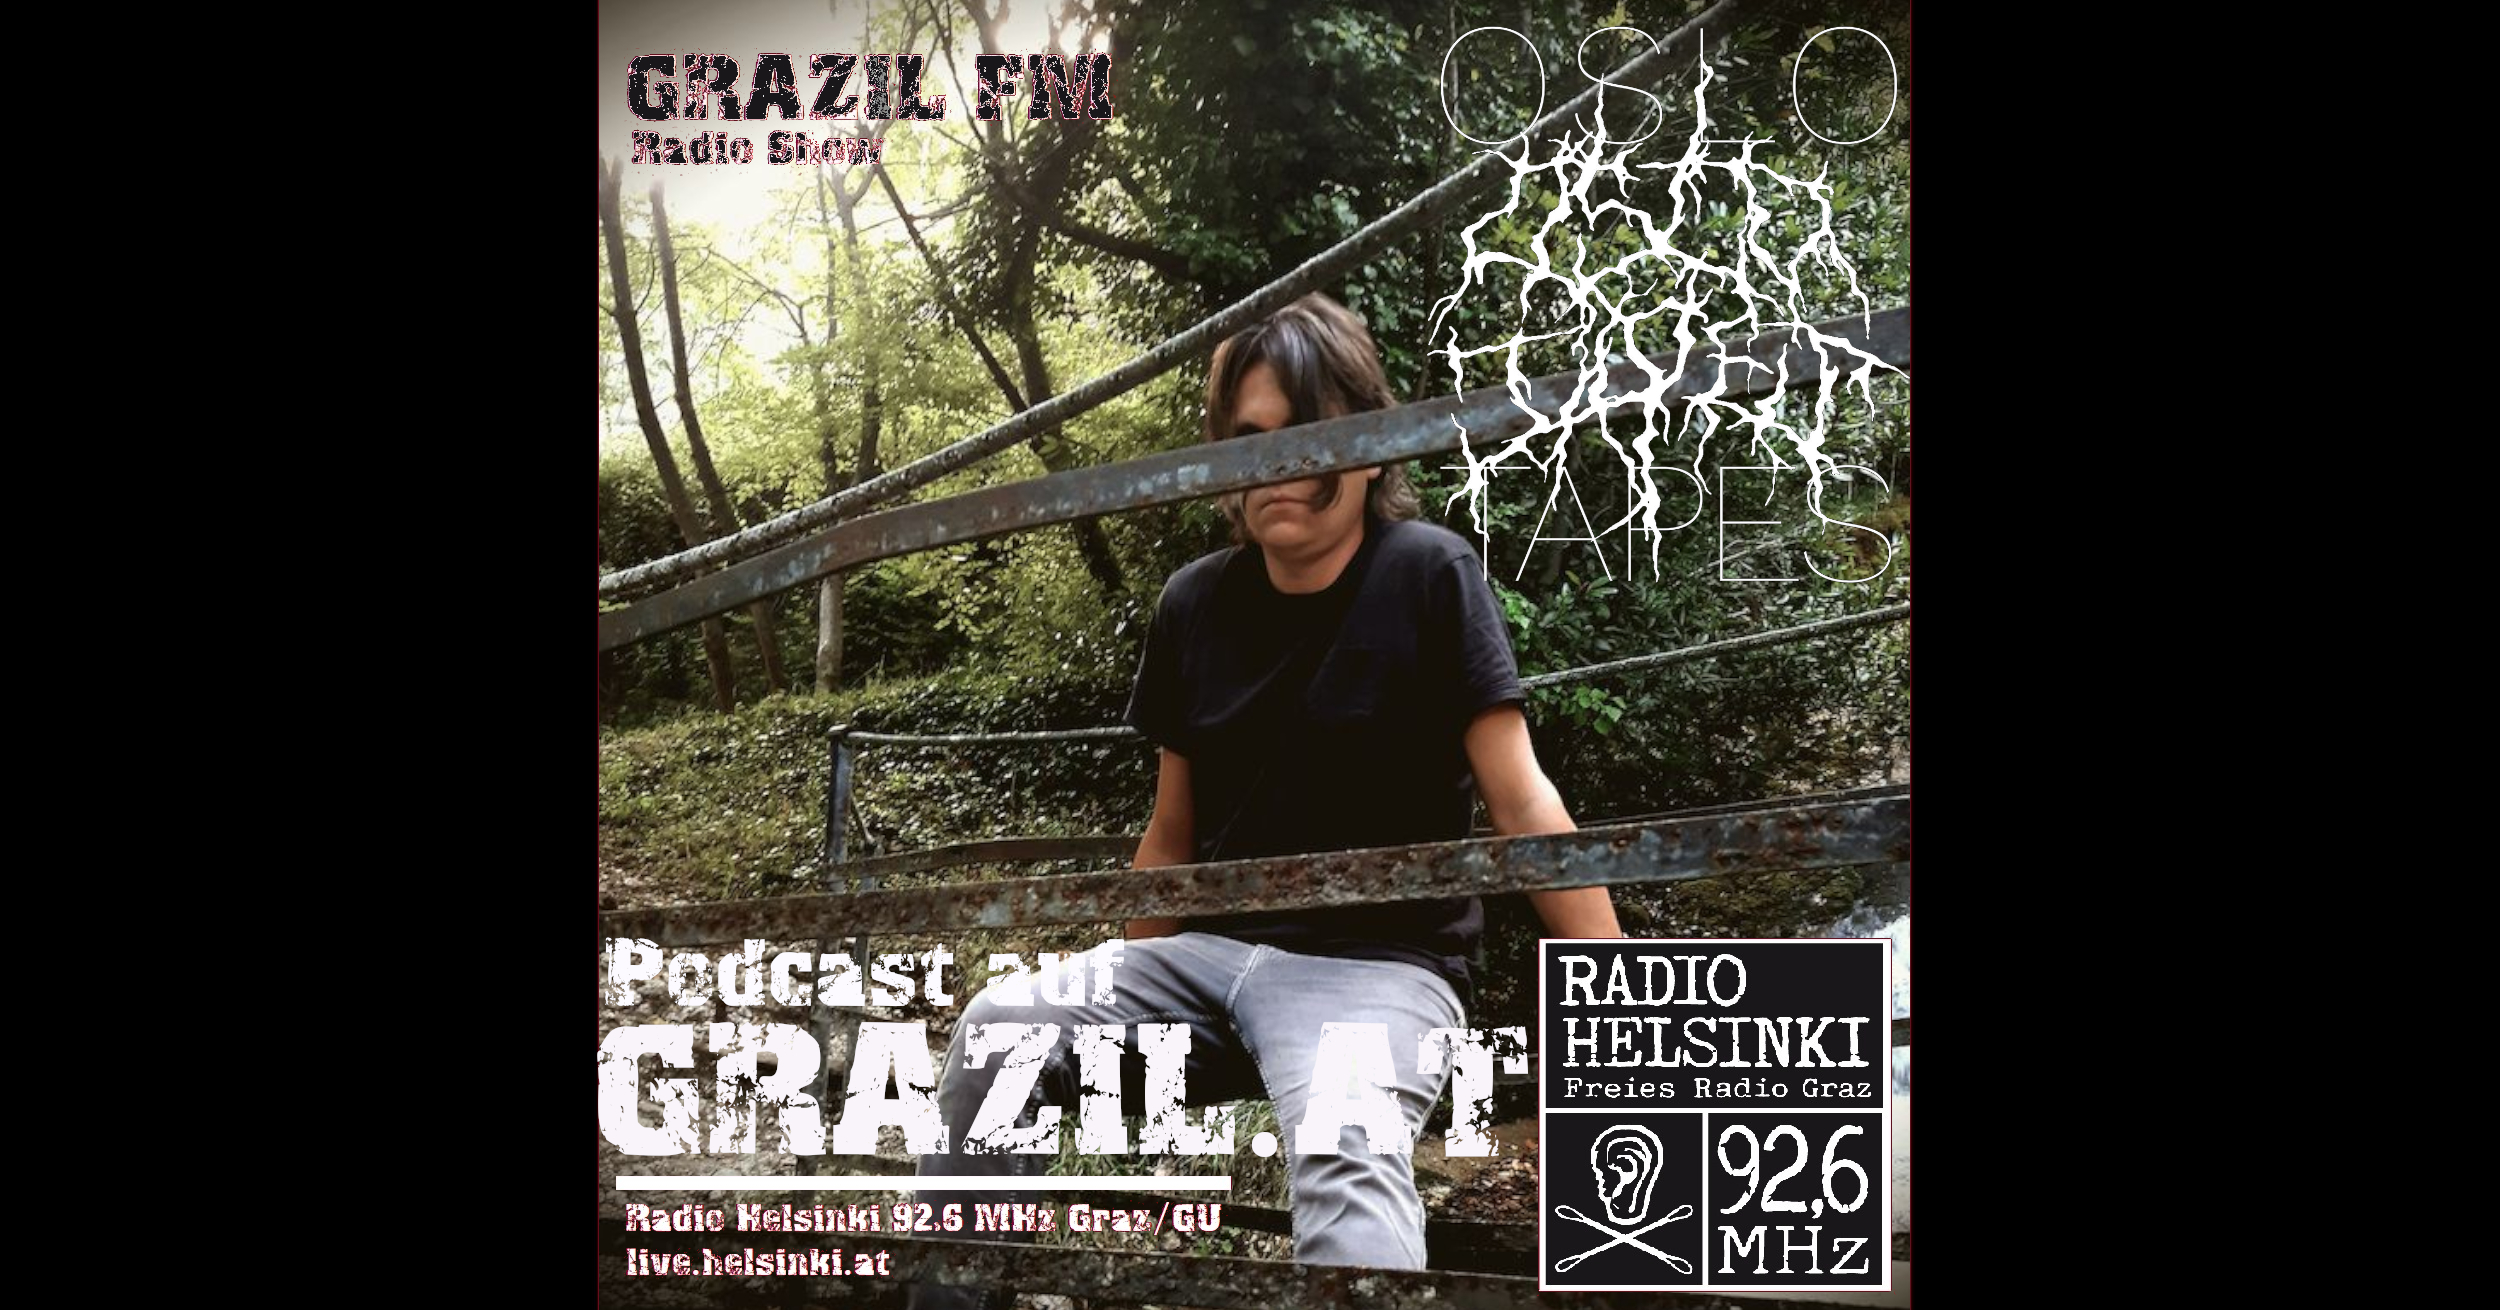 grazil FM Oslo Tapes Podcast Radio Helsinki Cle Pecher grazil Records